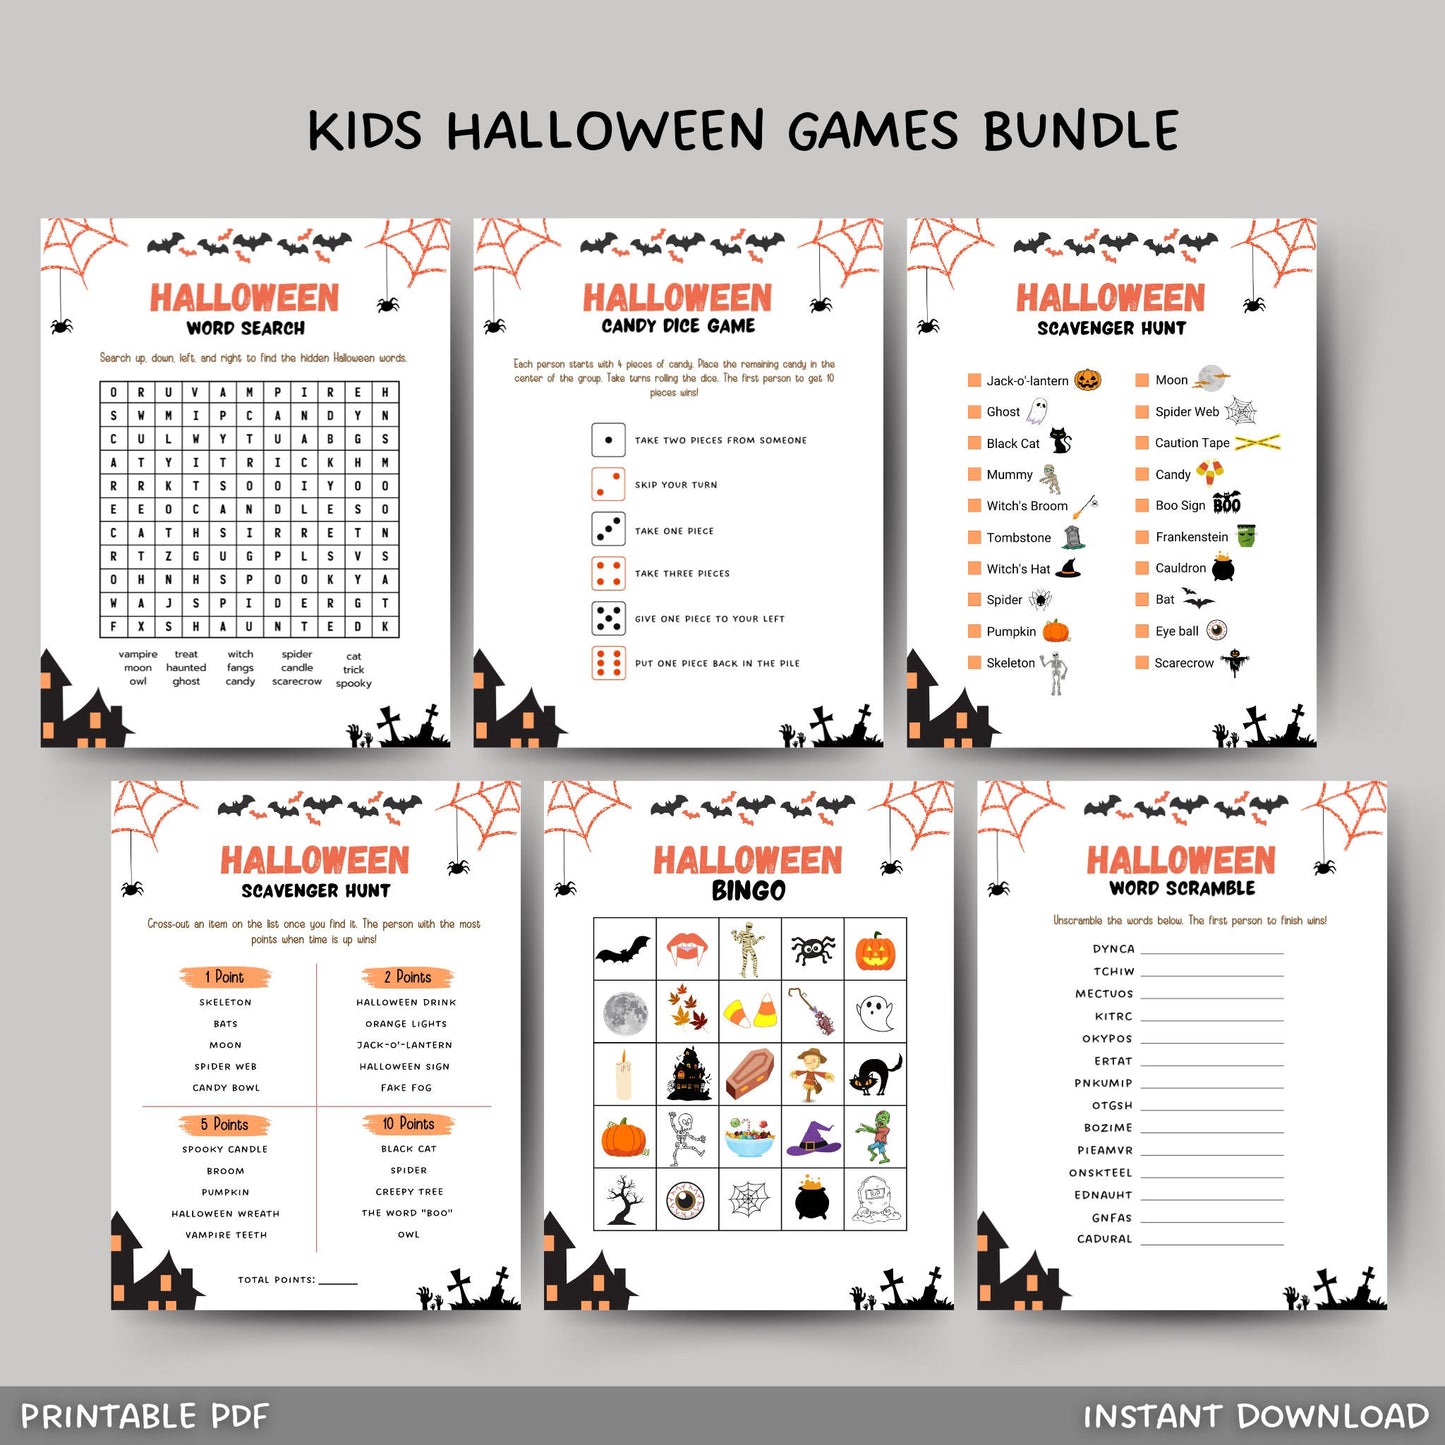 Halloween Games Bundle Kids Printable, Halloween Party Games, Scavenger Hunt, Candy Dice Game, Bingo, Word Search, Word Scramble